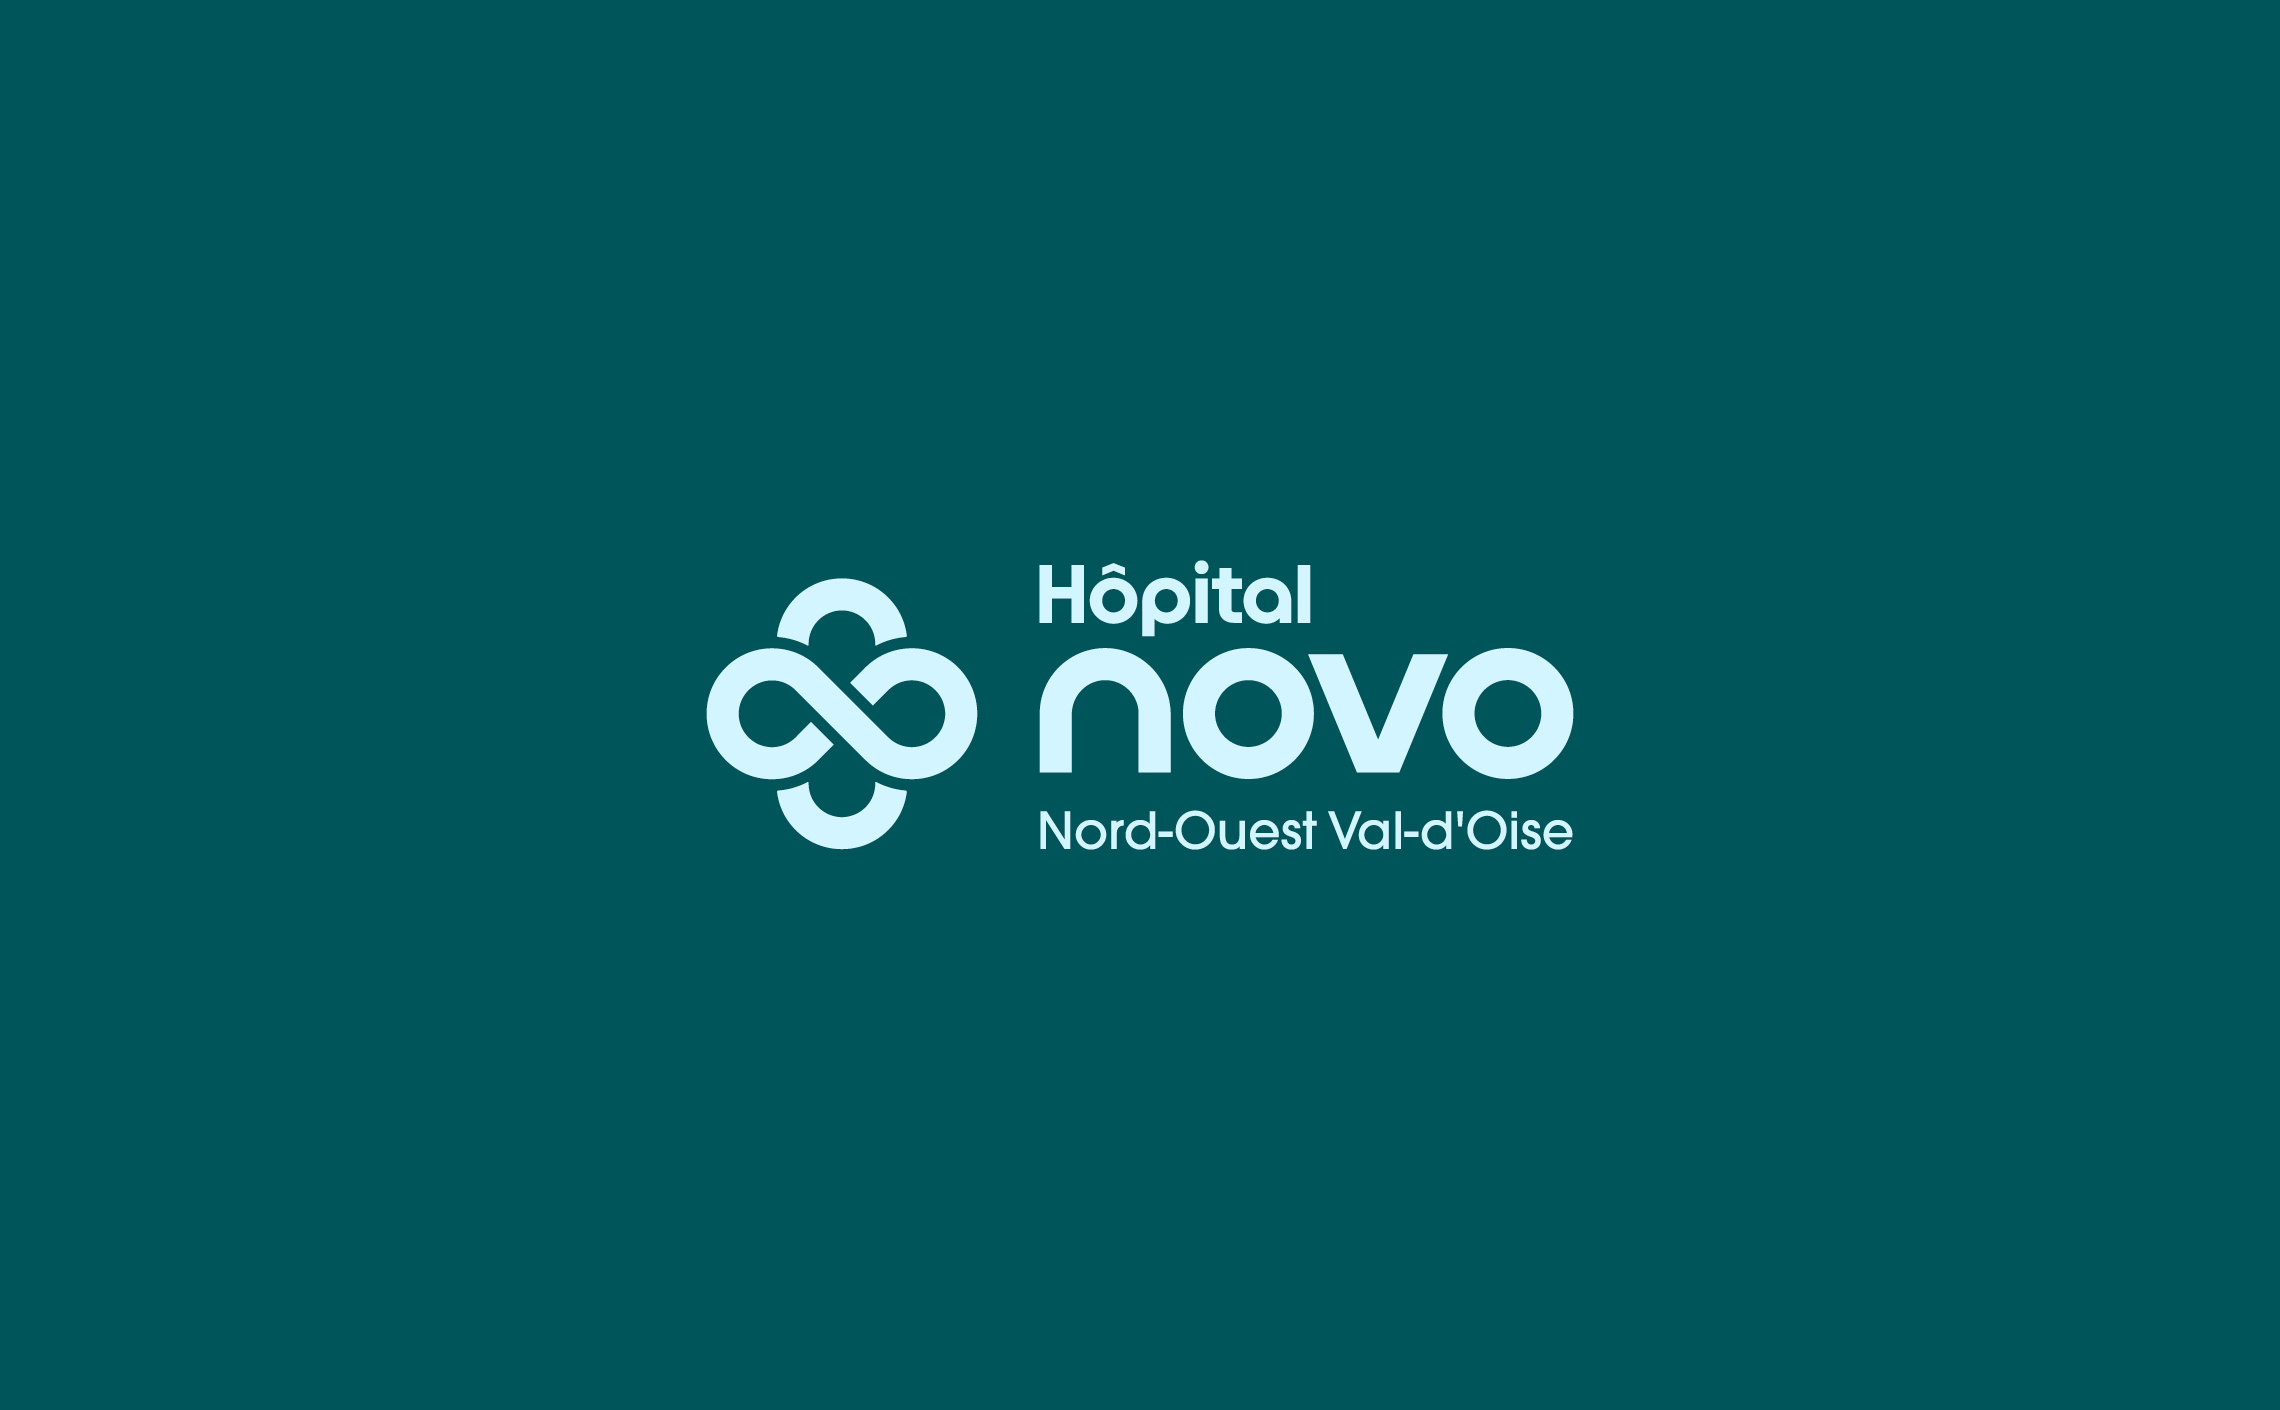 Hospital-NOVO-visual-identity-logo